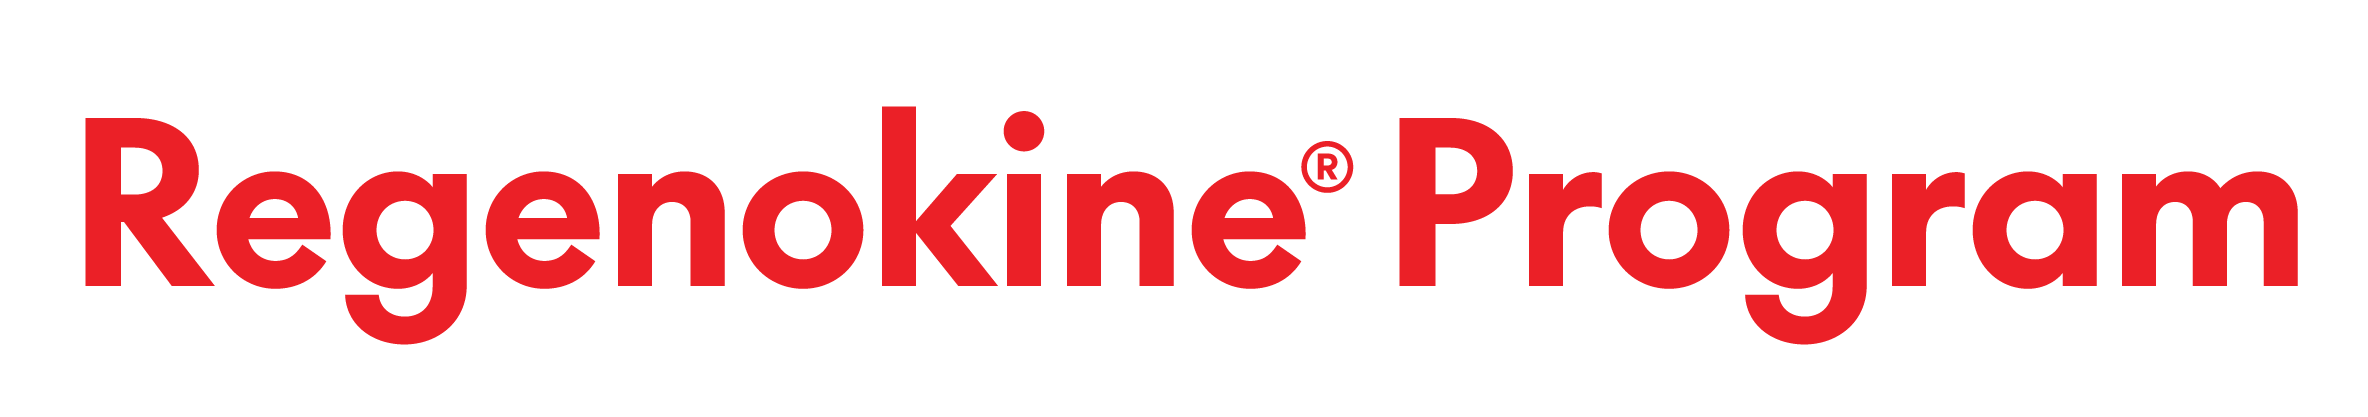 regenokine program logo